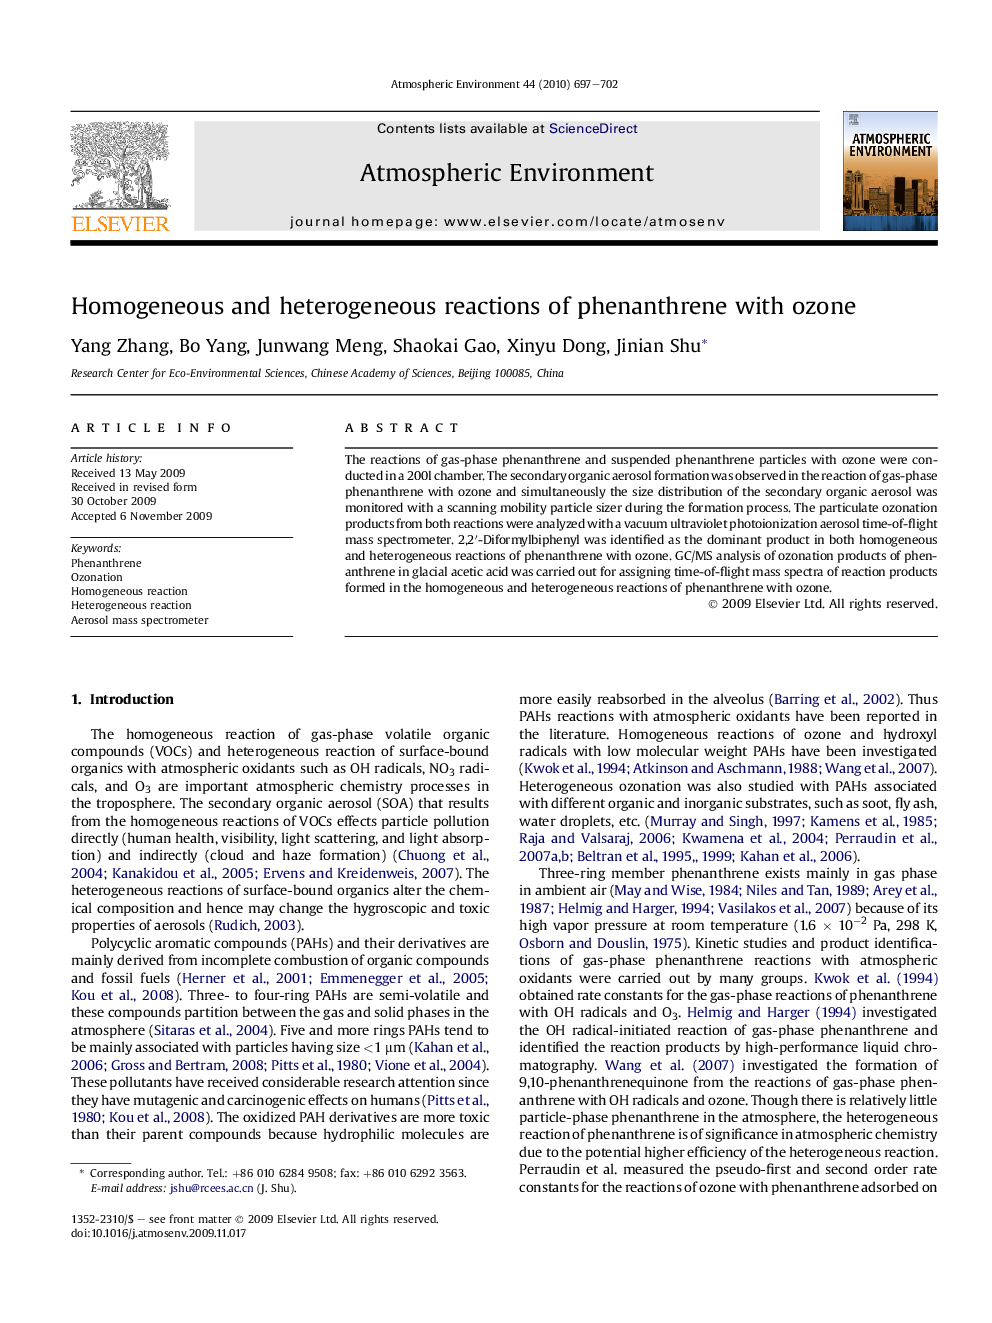 Homogeneous and heterogeneous reactions of phenanthrene with ozone